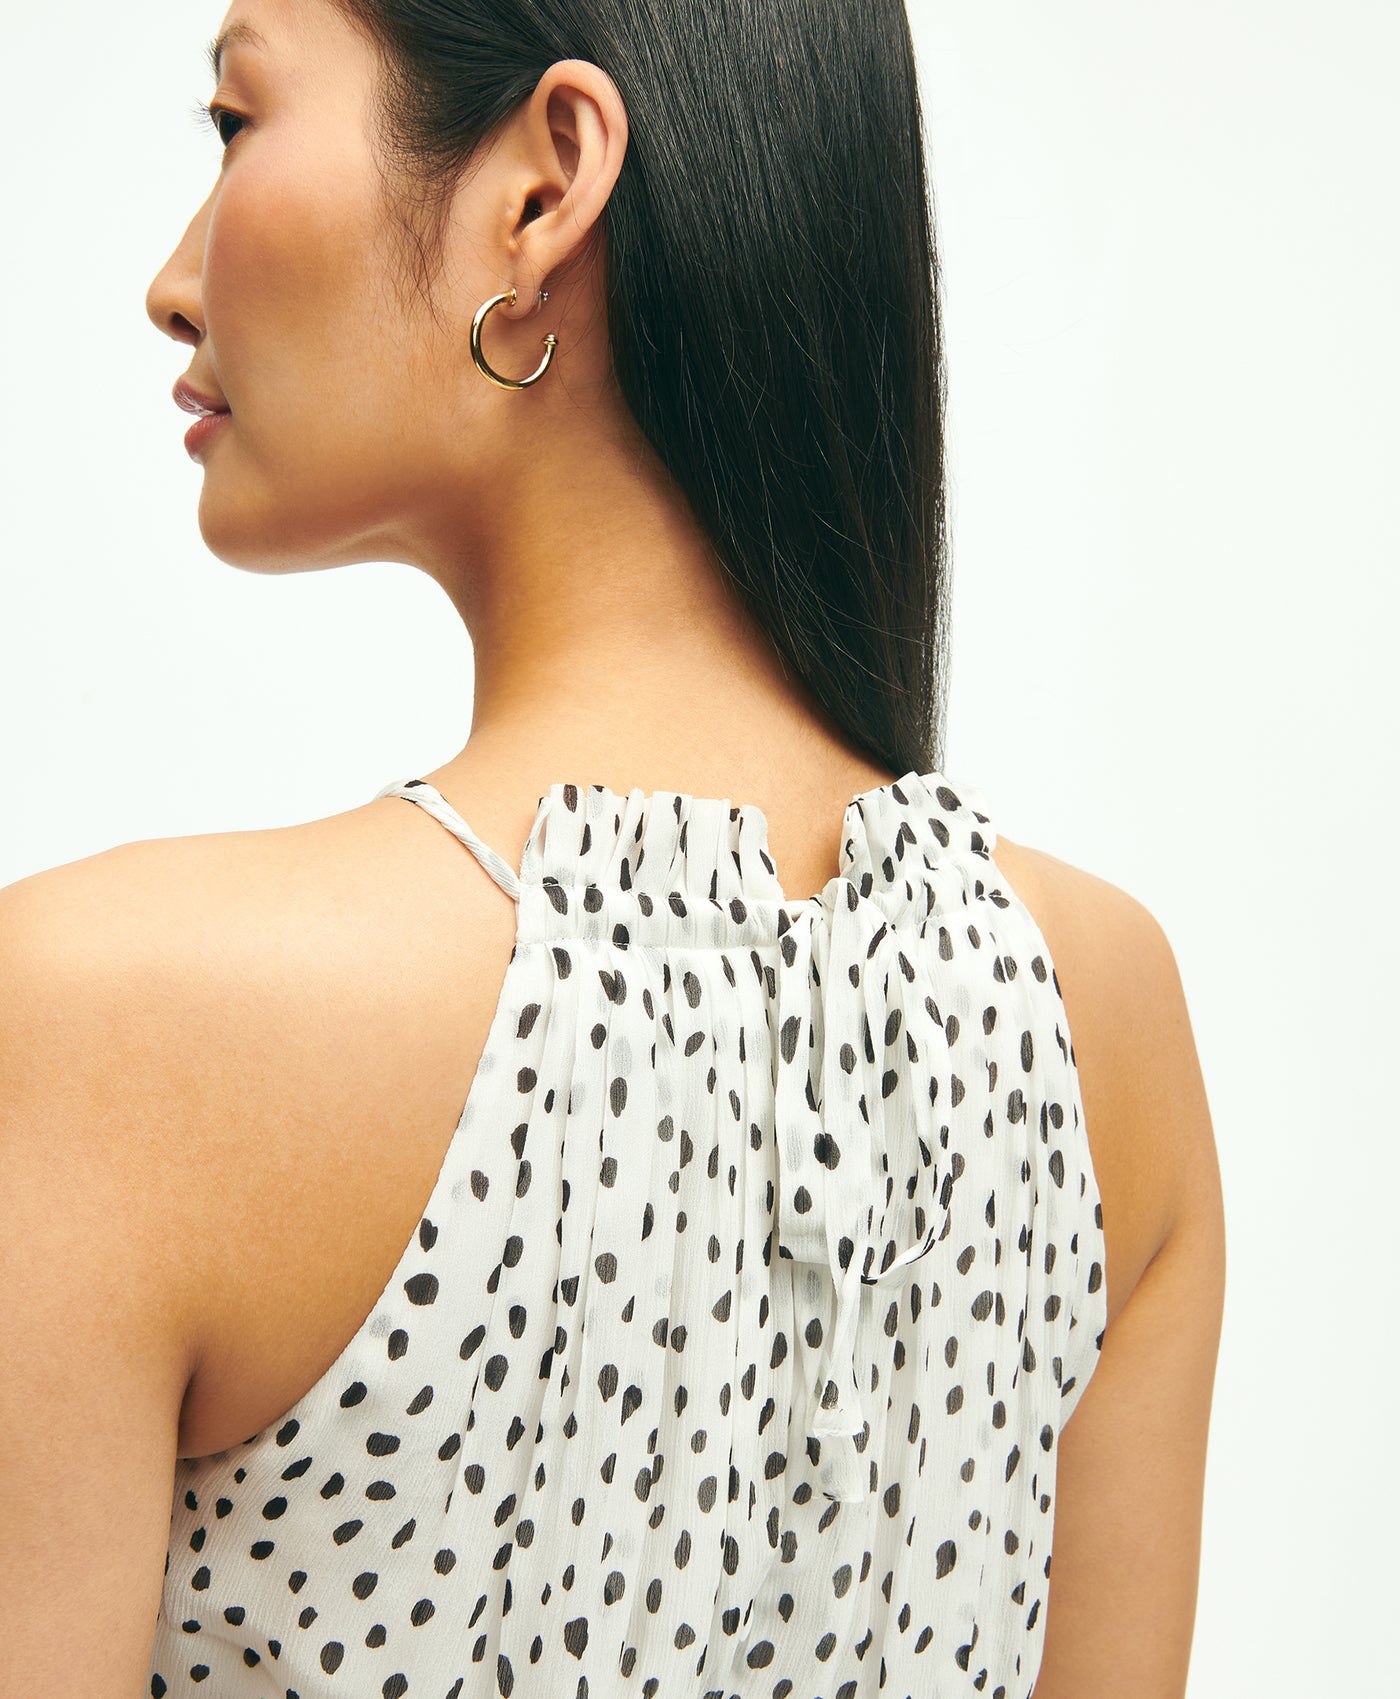 Chiffon Dot Print Pleated Halter Dress - Brooks Brothers Canada